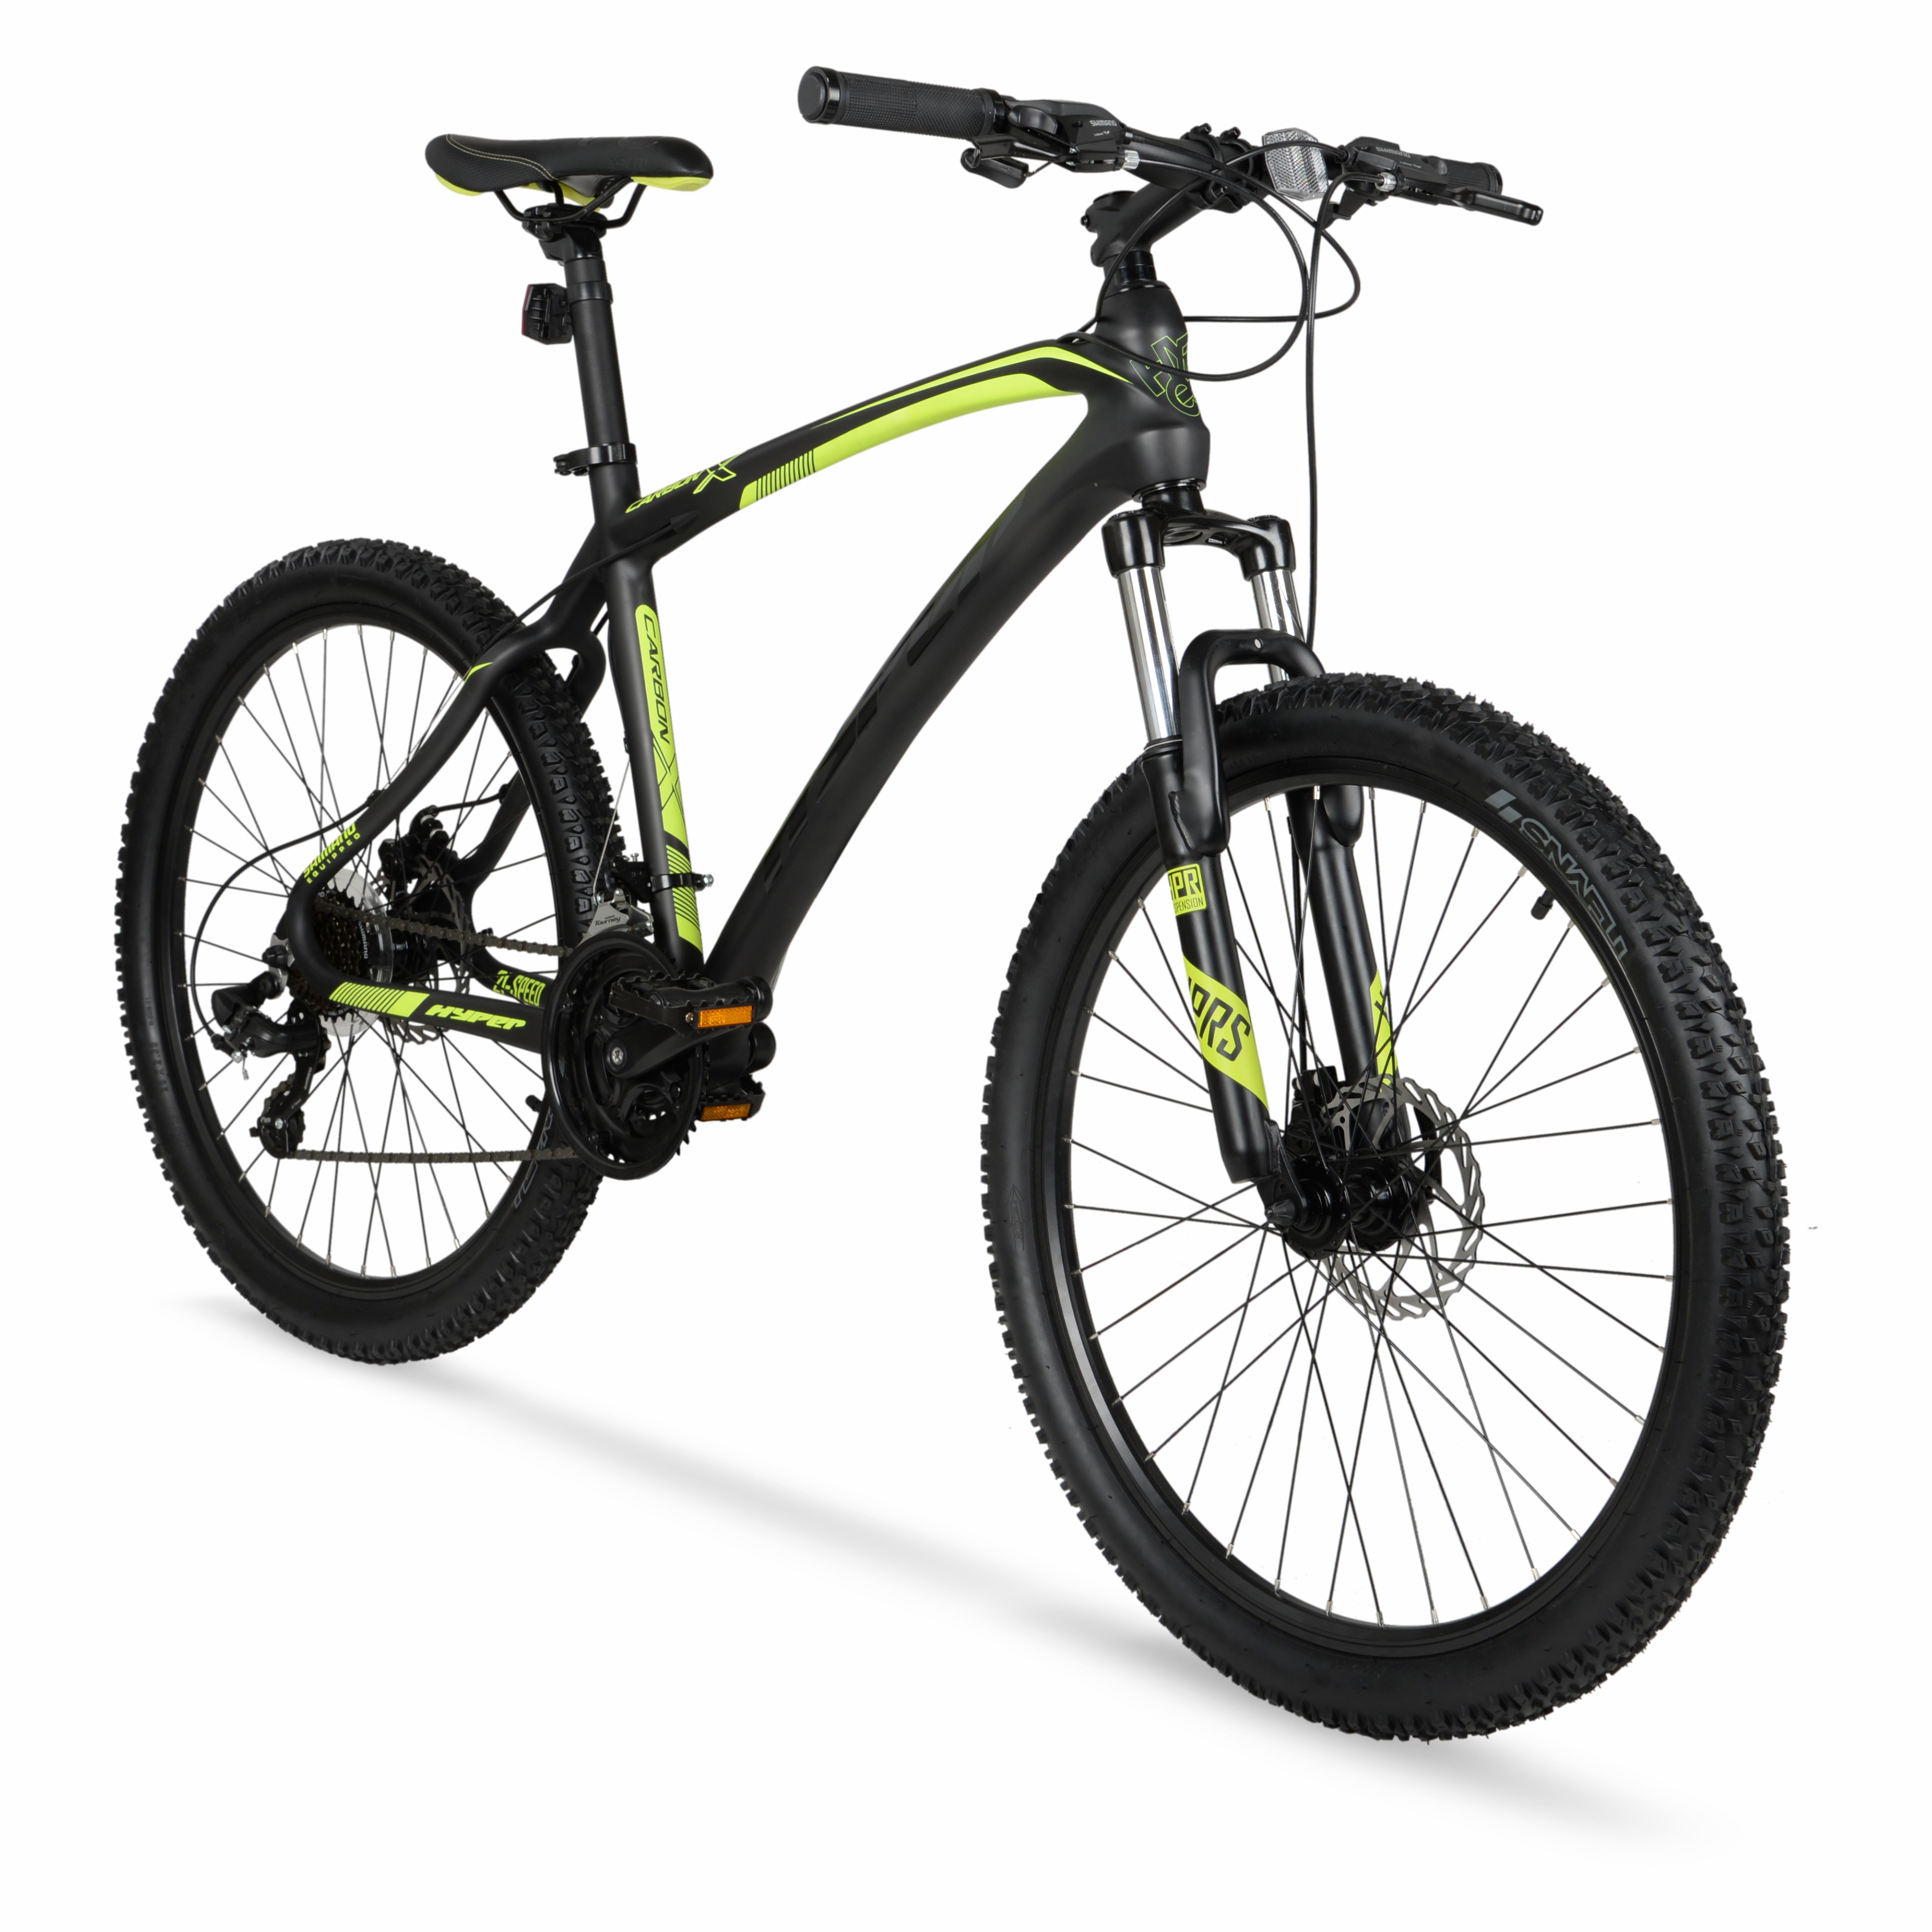 Hyper Bicycles 26" Carbon Fiber Men's Mountain Bike, Black/Green - image 1 of 12